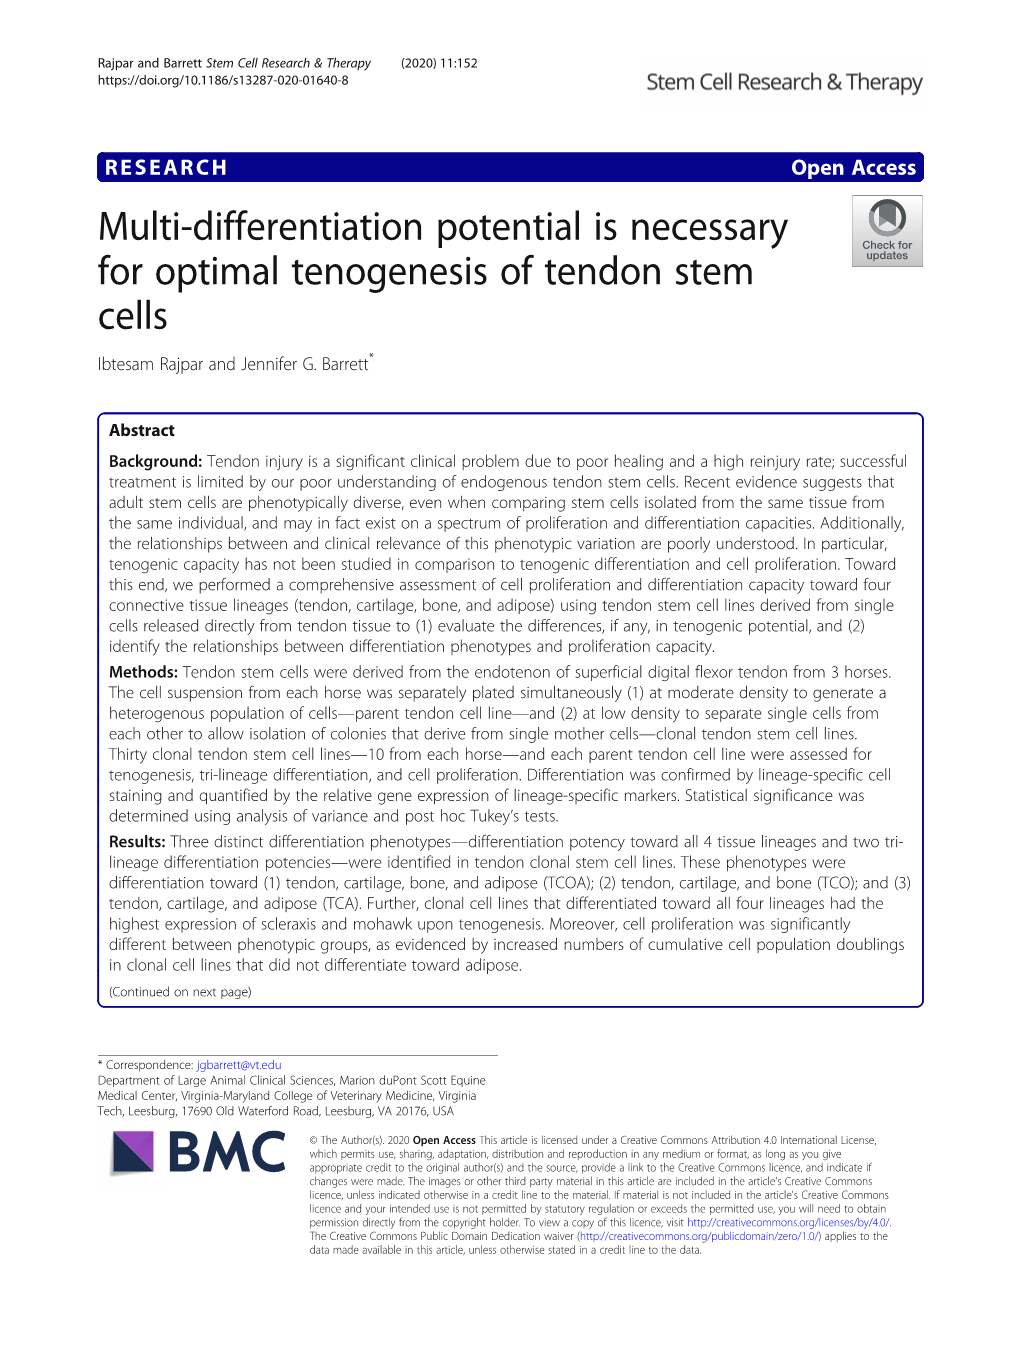 Multi-Differentiation Potential Is Necessary for Optimal Tenogenesis of Tendon Stem Cells Ibtesam Rajpar and Jennifer G